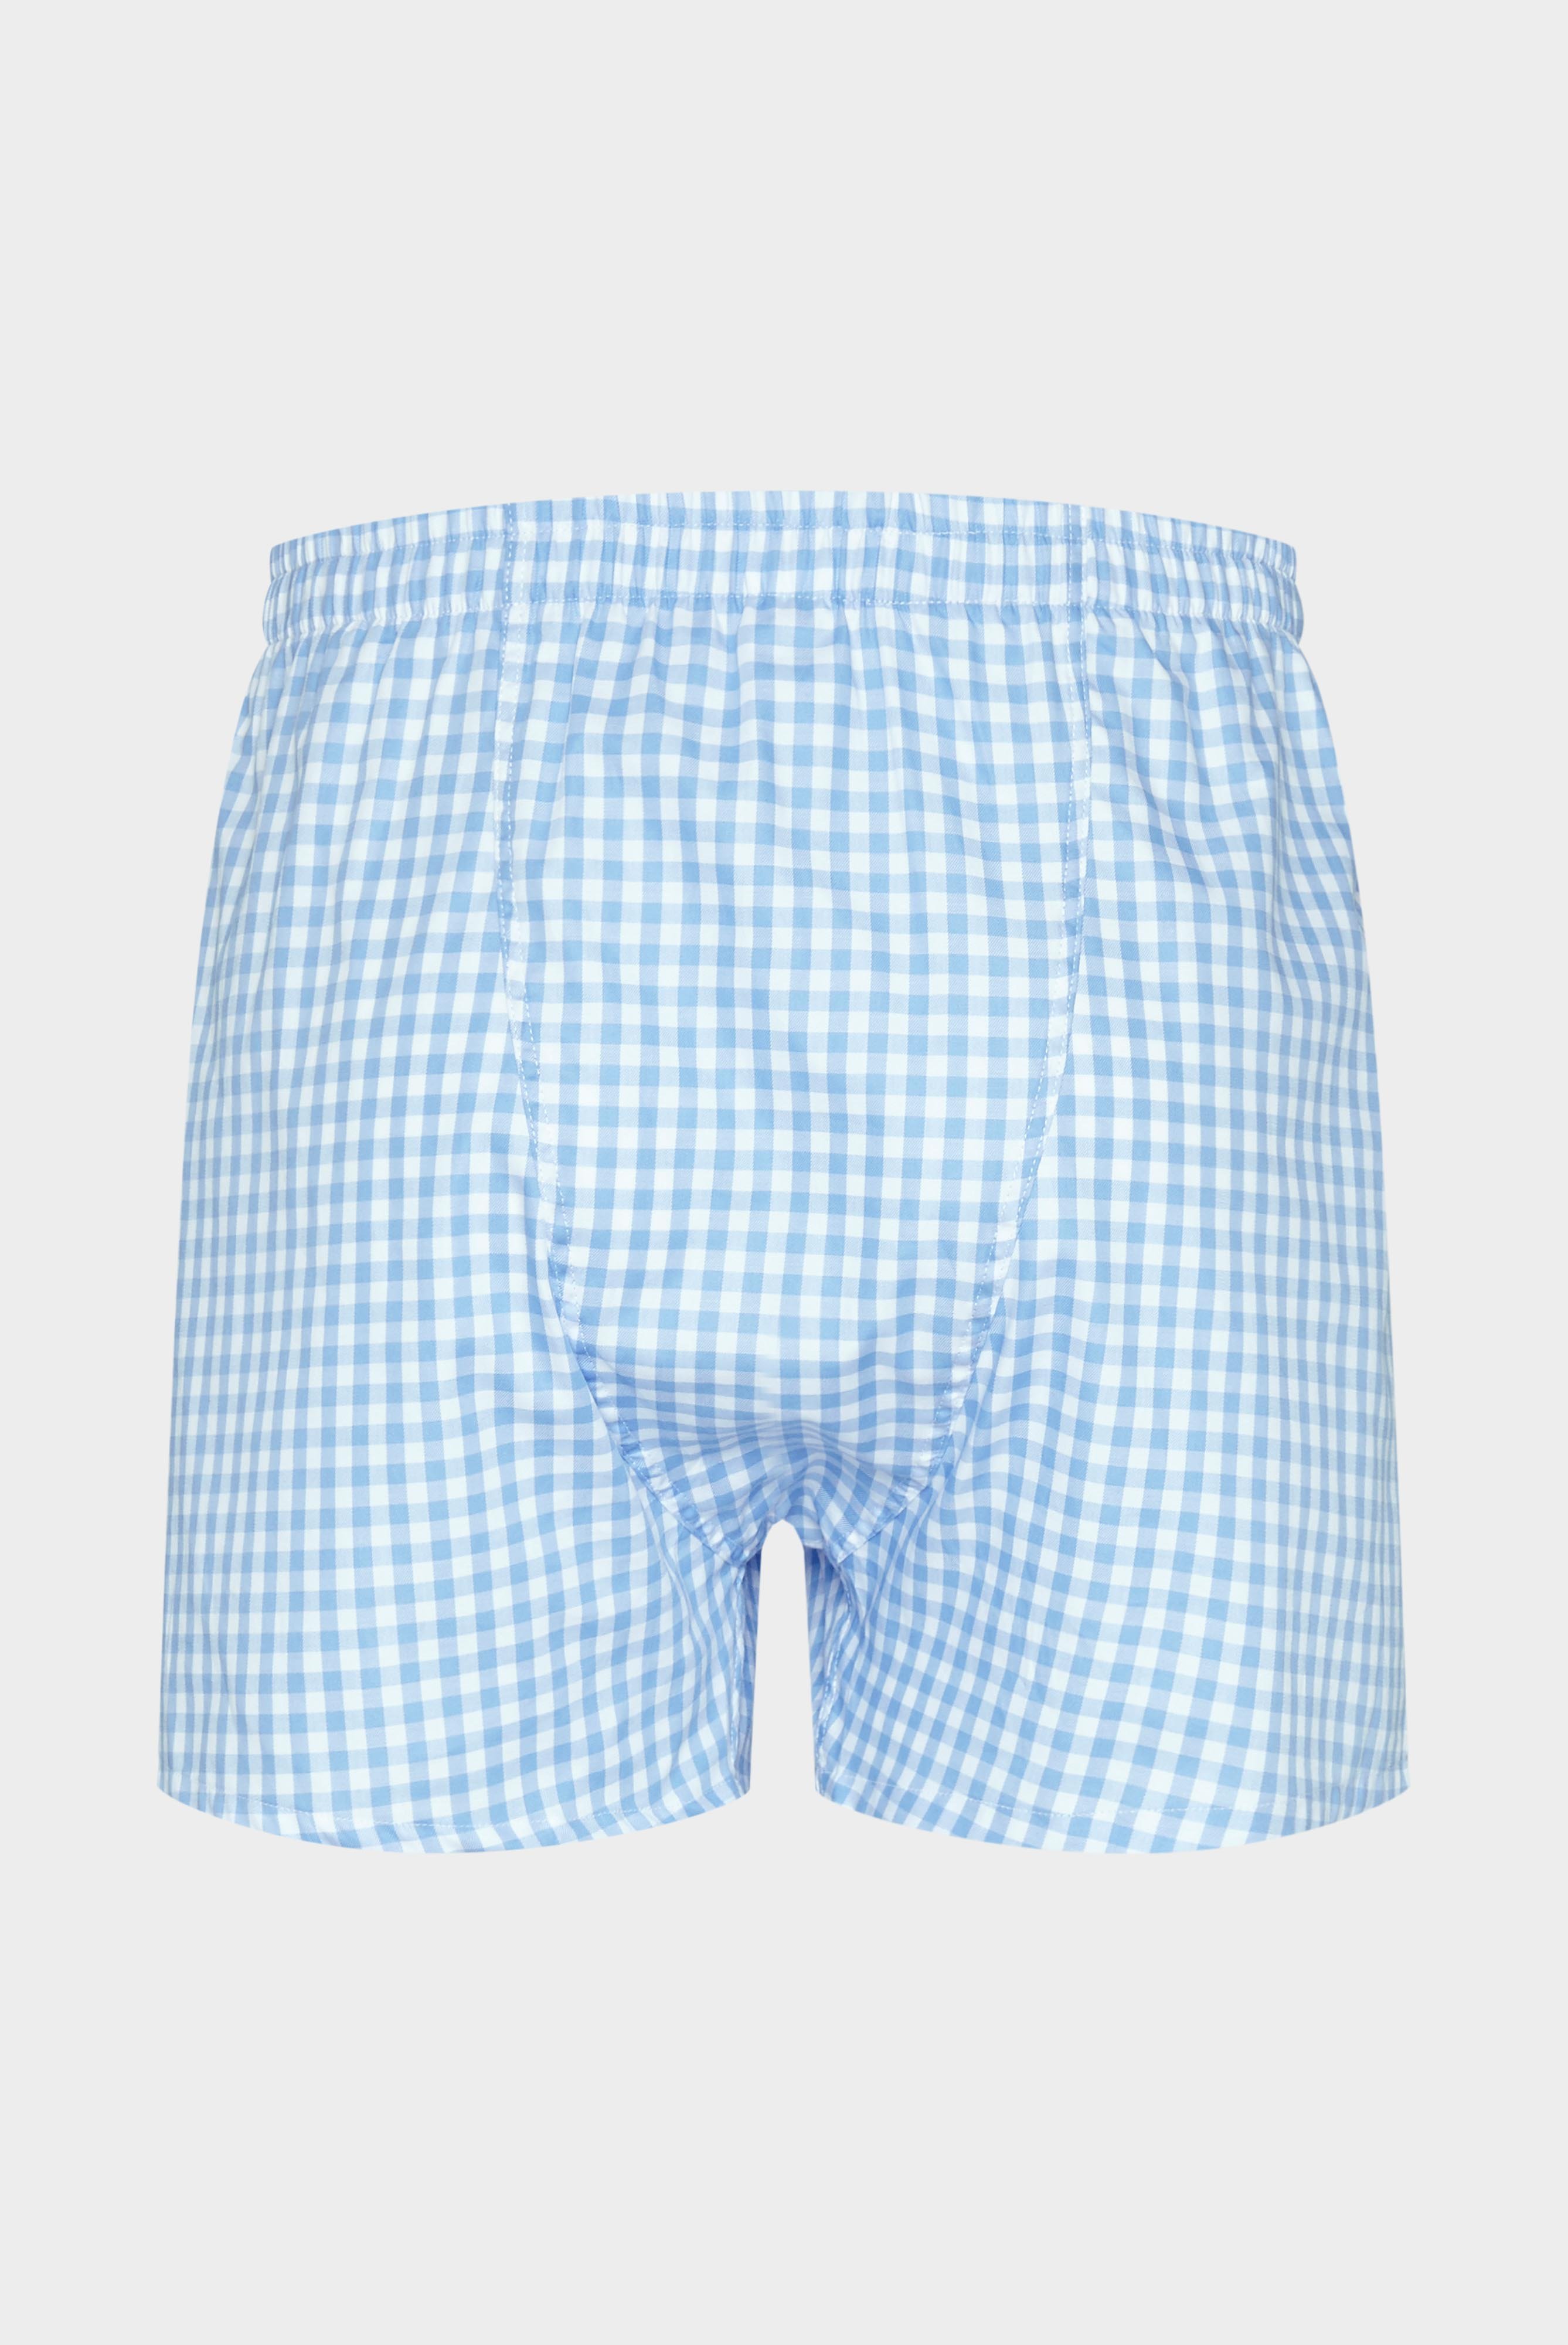 Underwear+Checked Cotton Twill Boxer Shorts+91.1100..152291.730.46